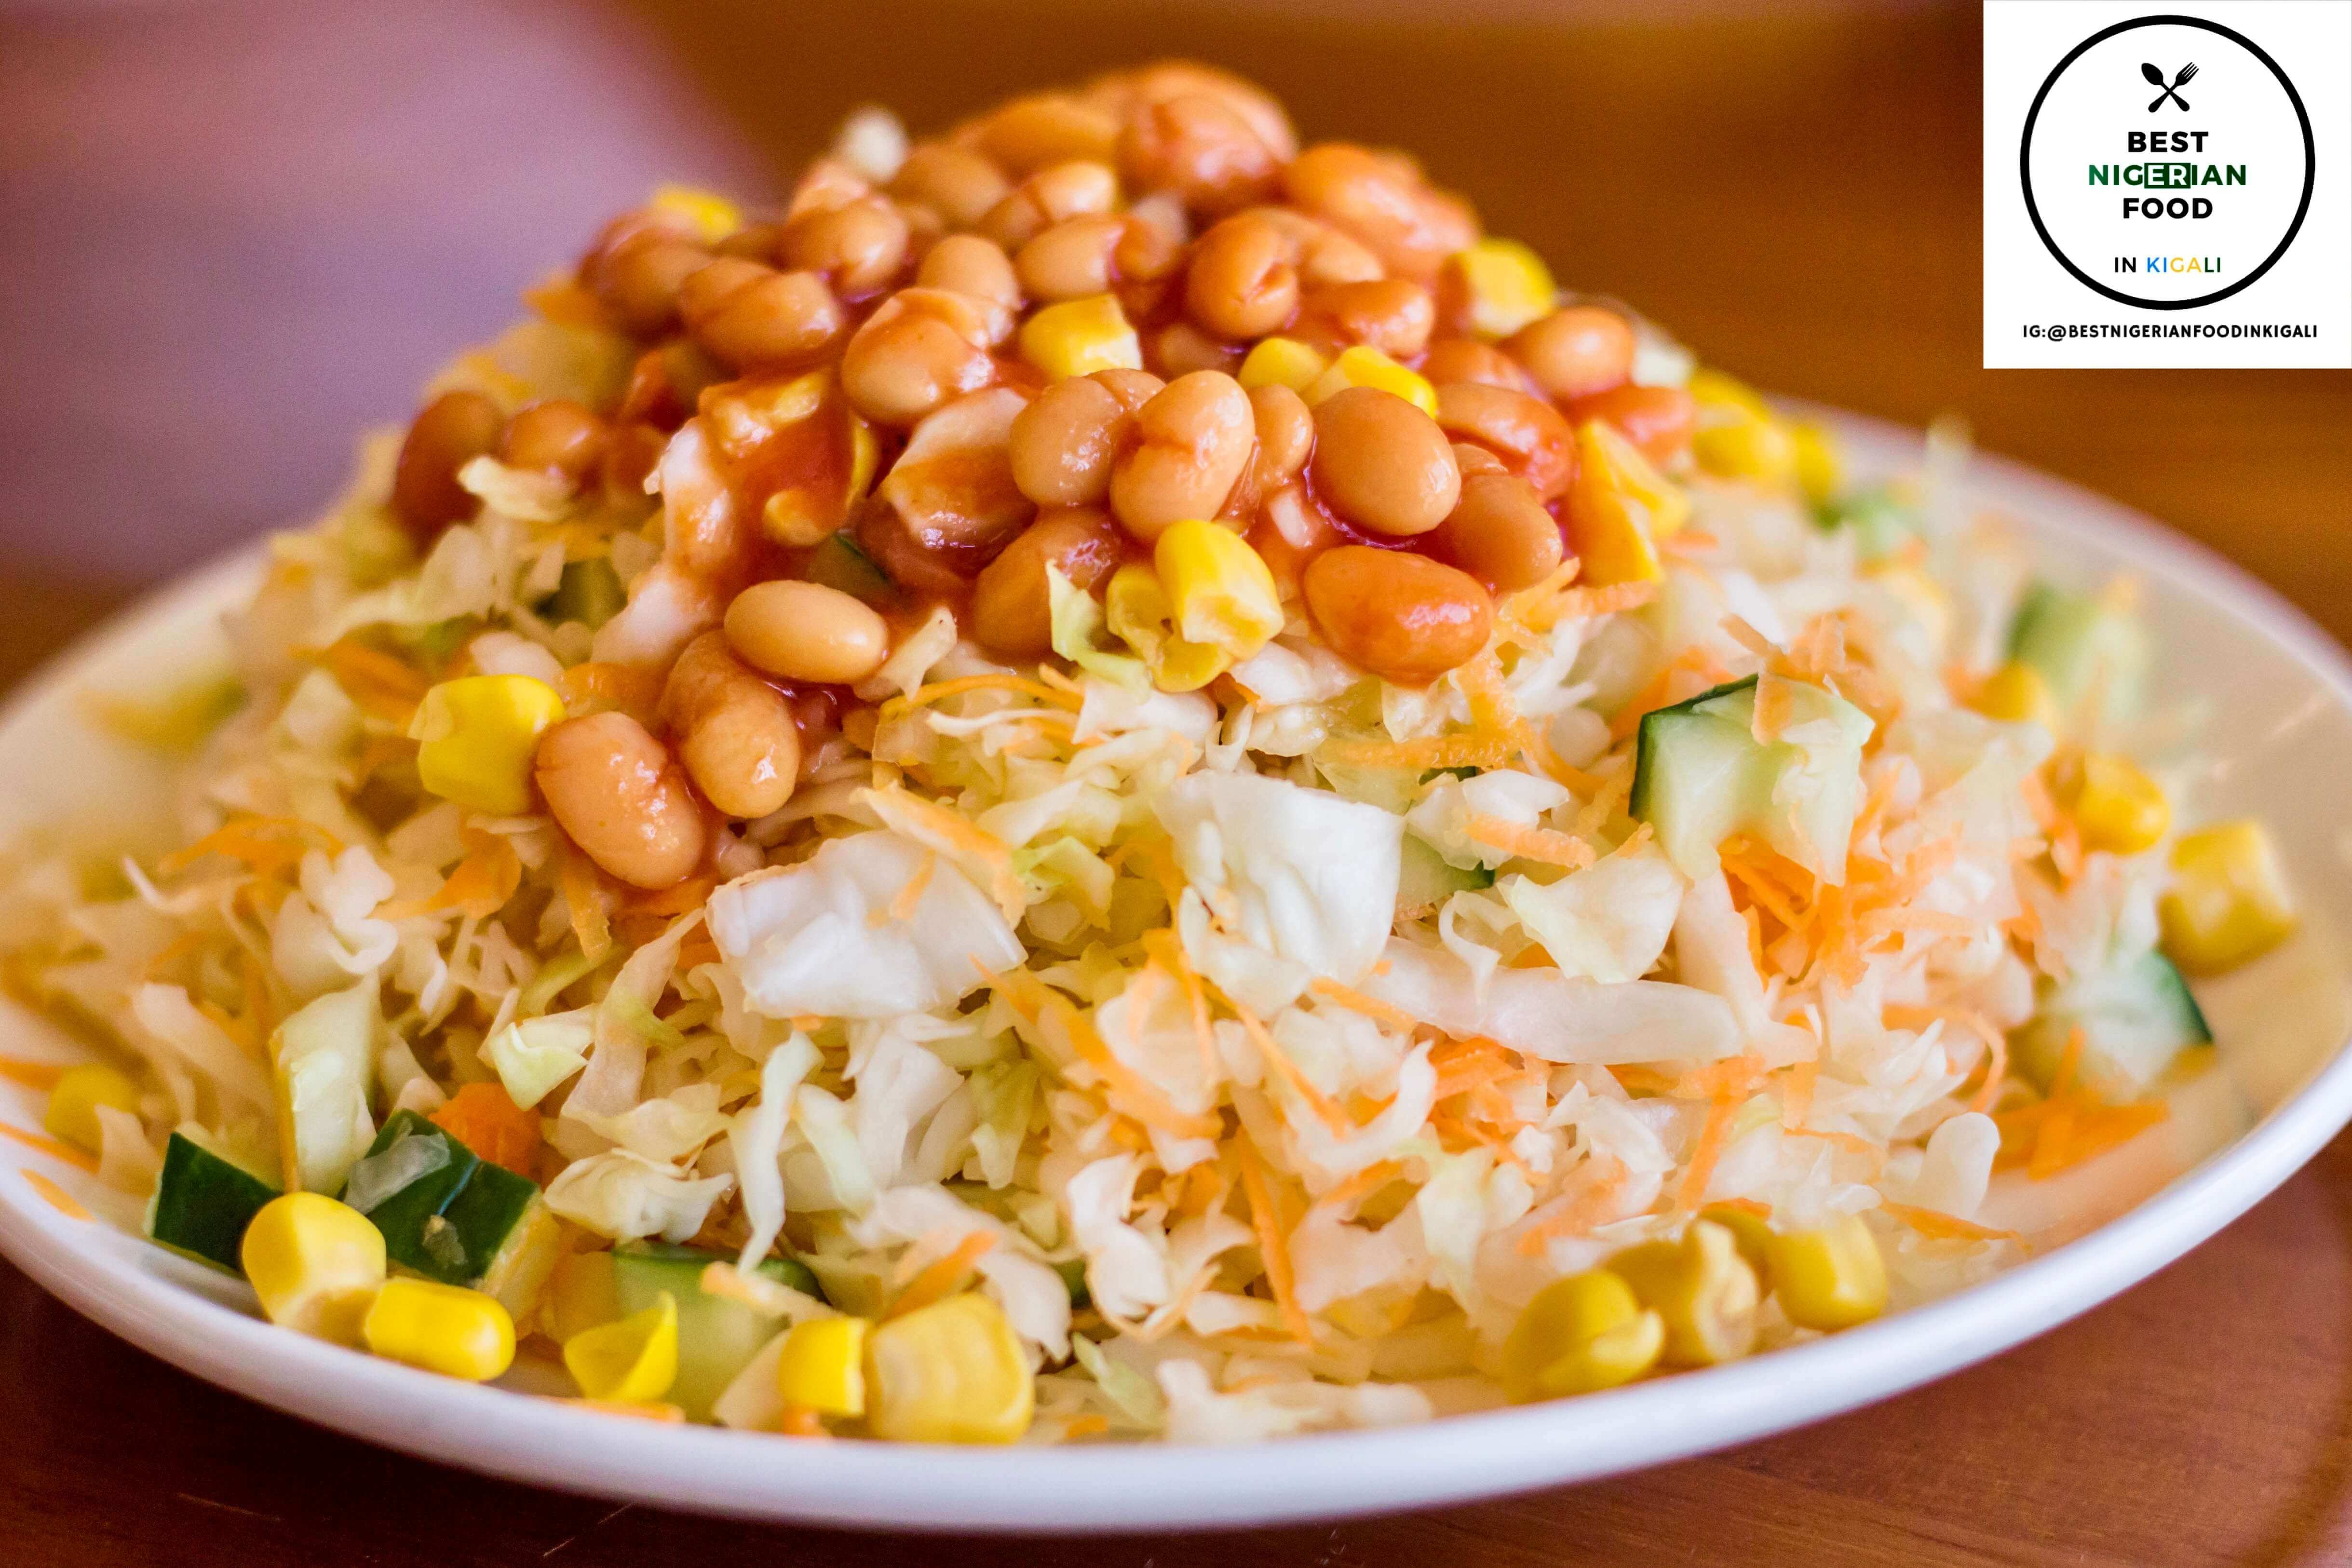 Salad - The Best Nigerian Food in Kigali